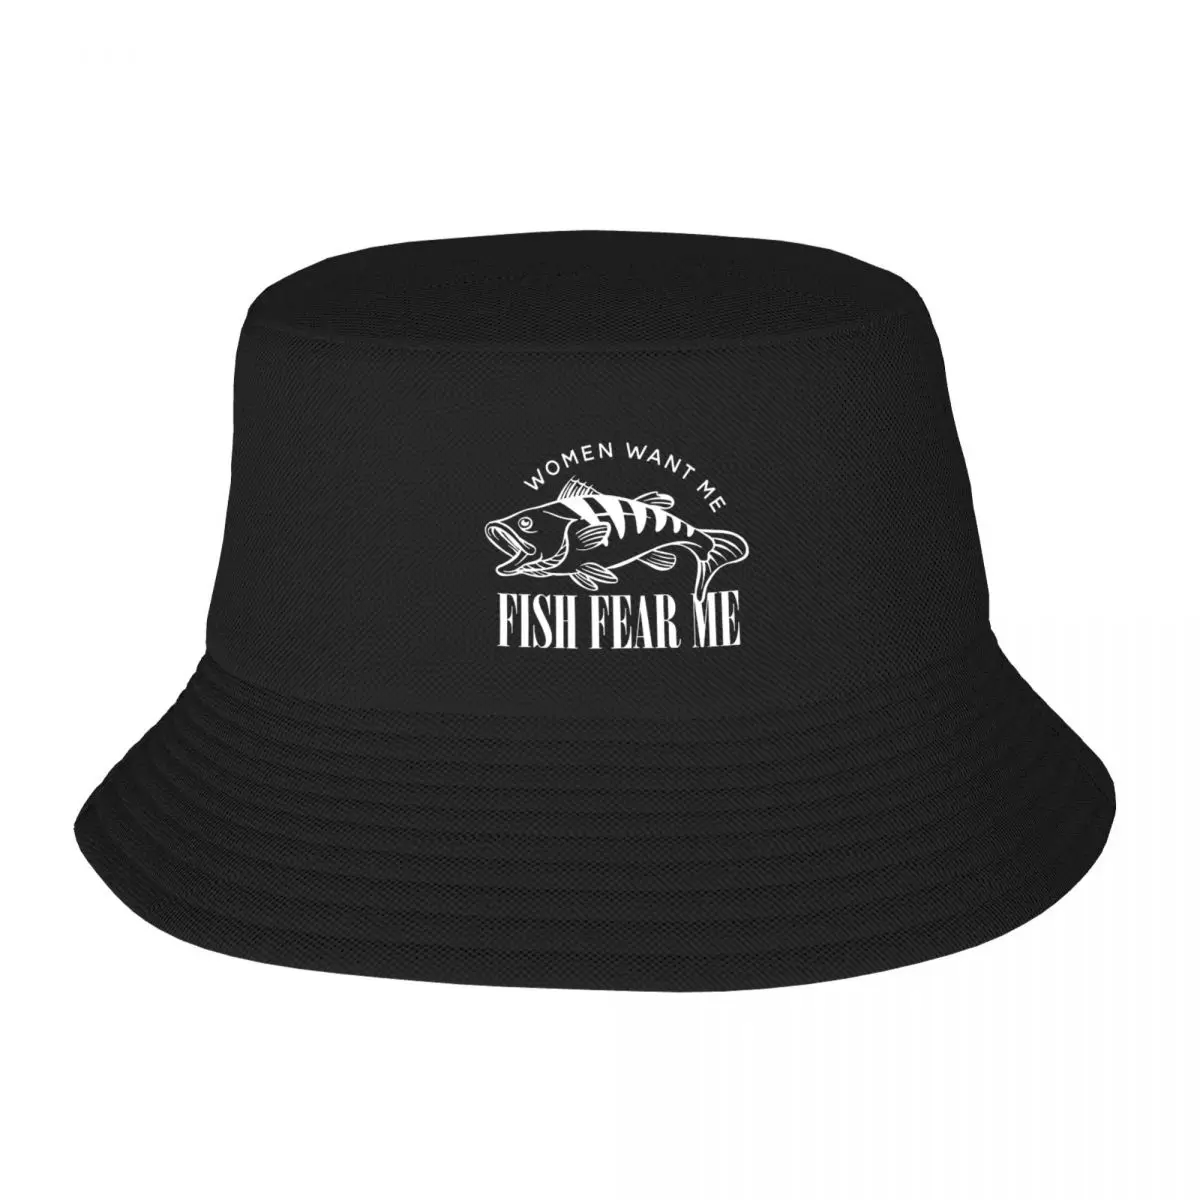 

Vocation Getaway Headwear Women Want Me Fish Fear Me Bucket Hats Woman Hot Sun Hats Funny Meme Session Hat Fishing Fisherman Cap